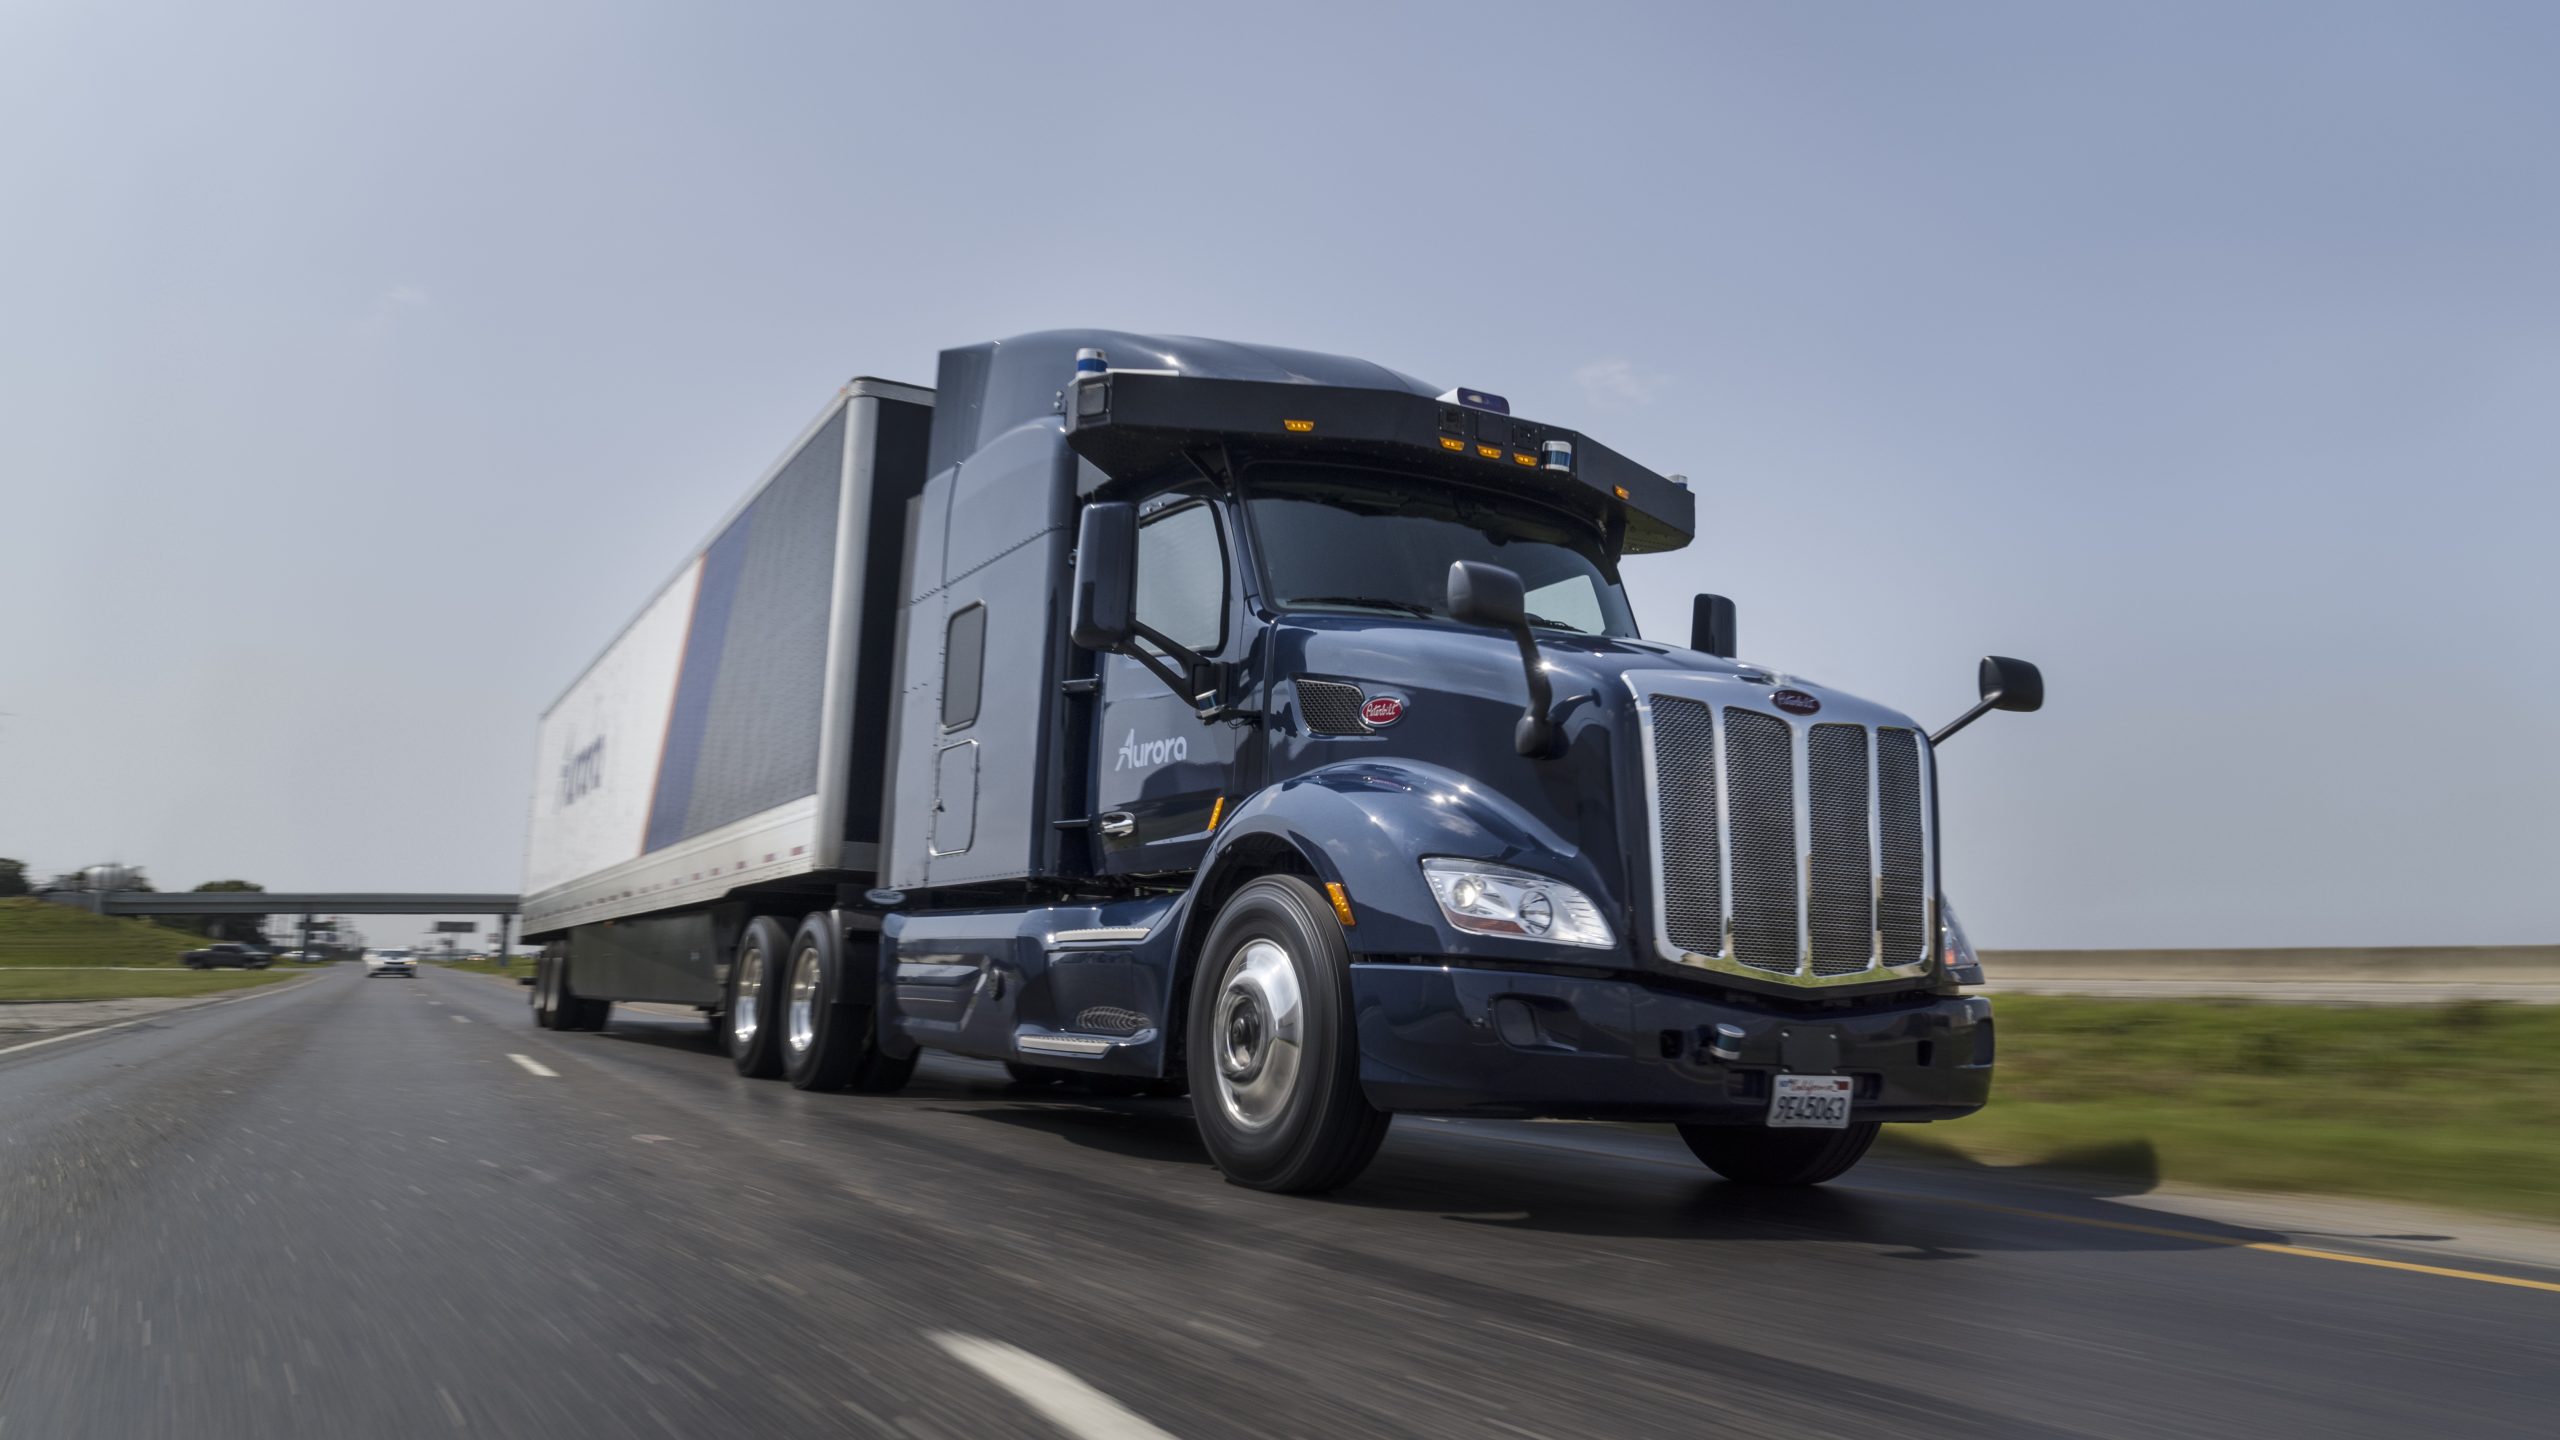 Aurora And Continental Achieve Milestone In Self-Driving Trucks Project